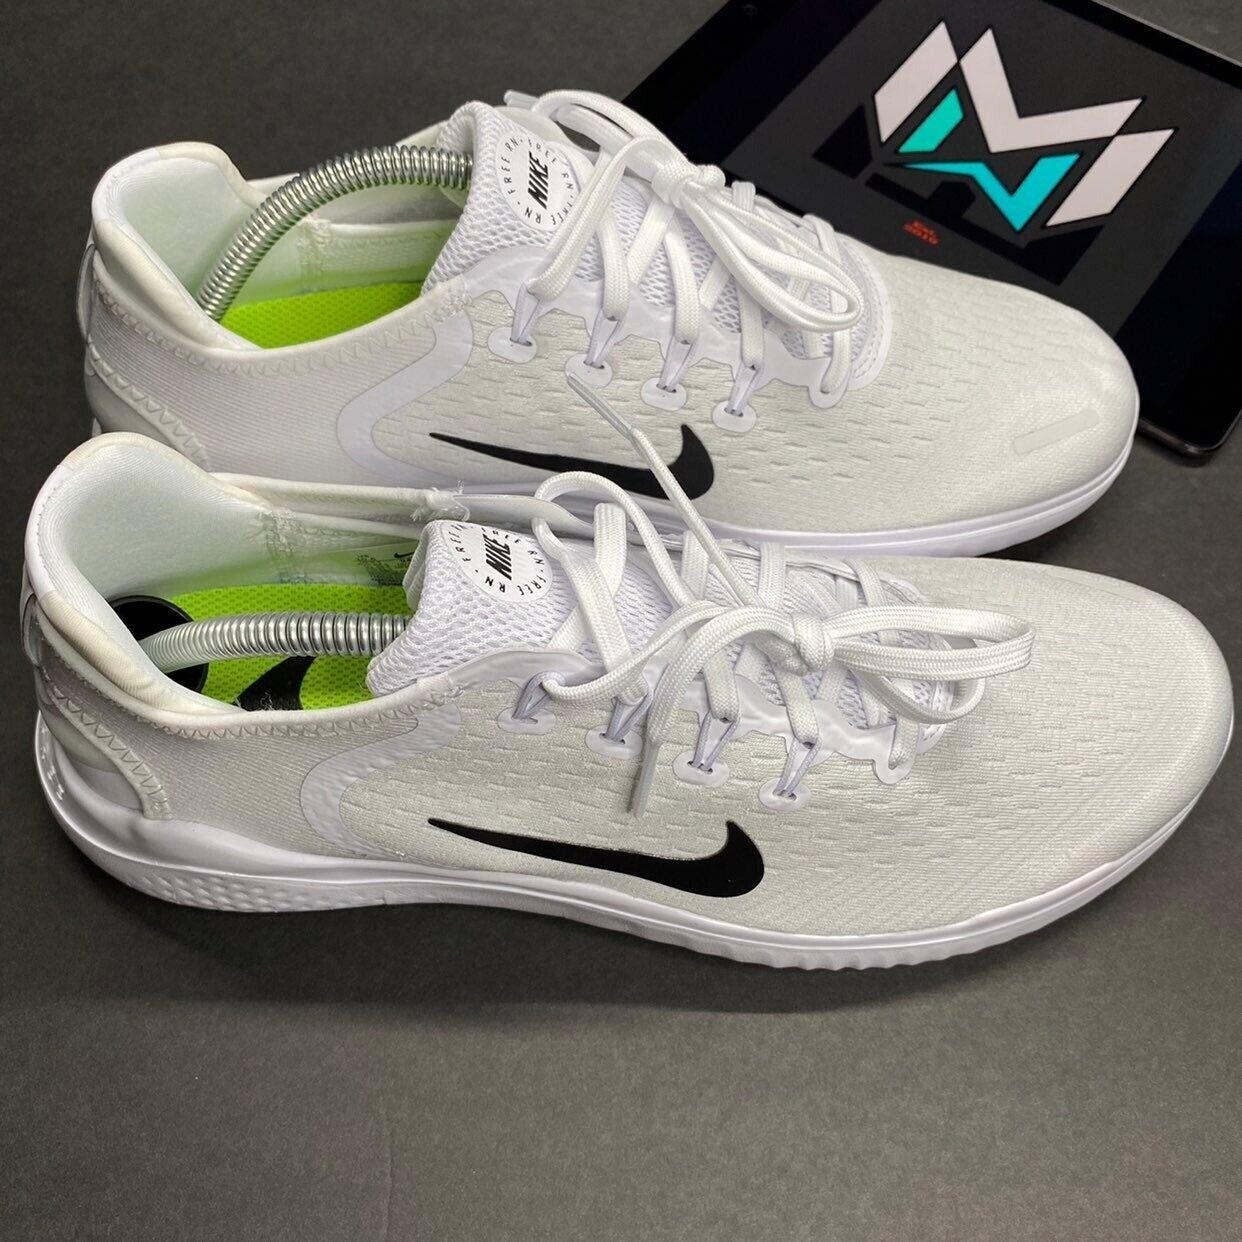 Nike shoes Free - White 2